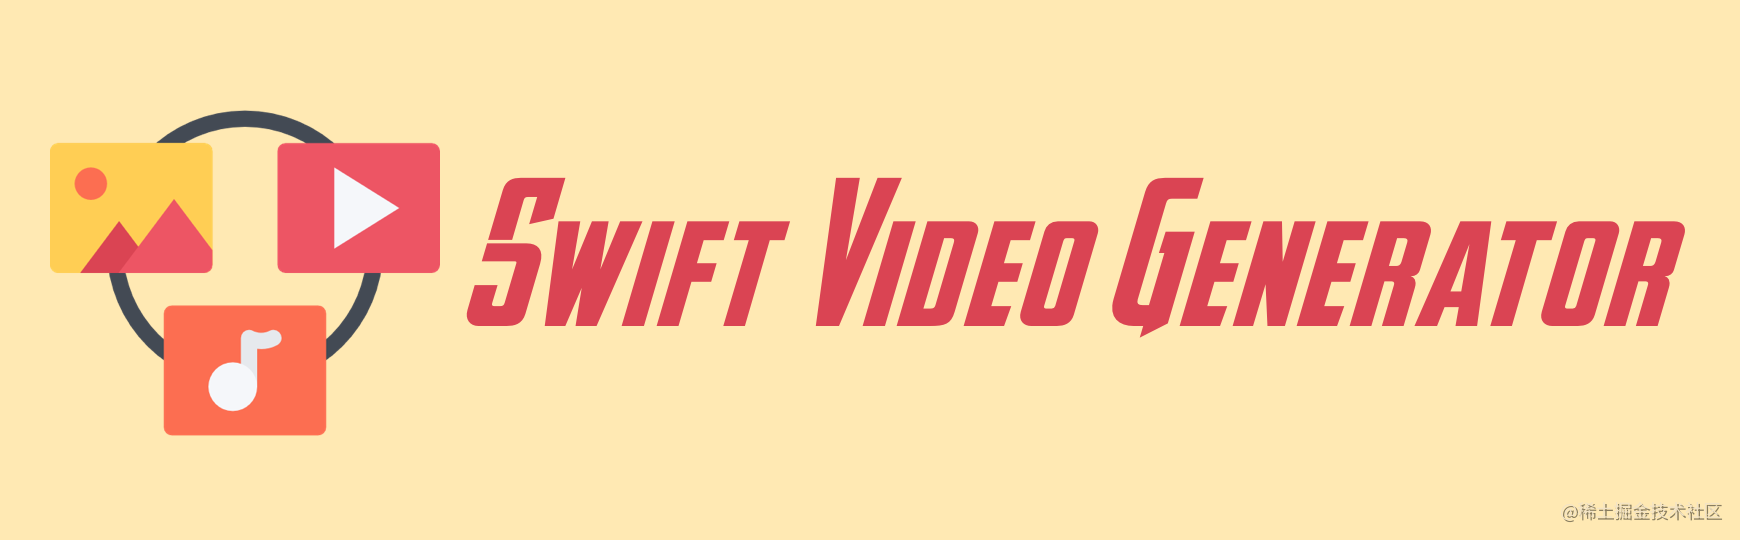 swift-video-generator-logo